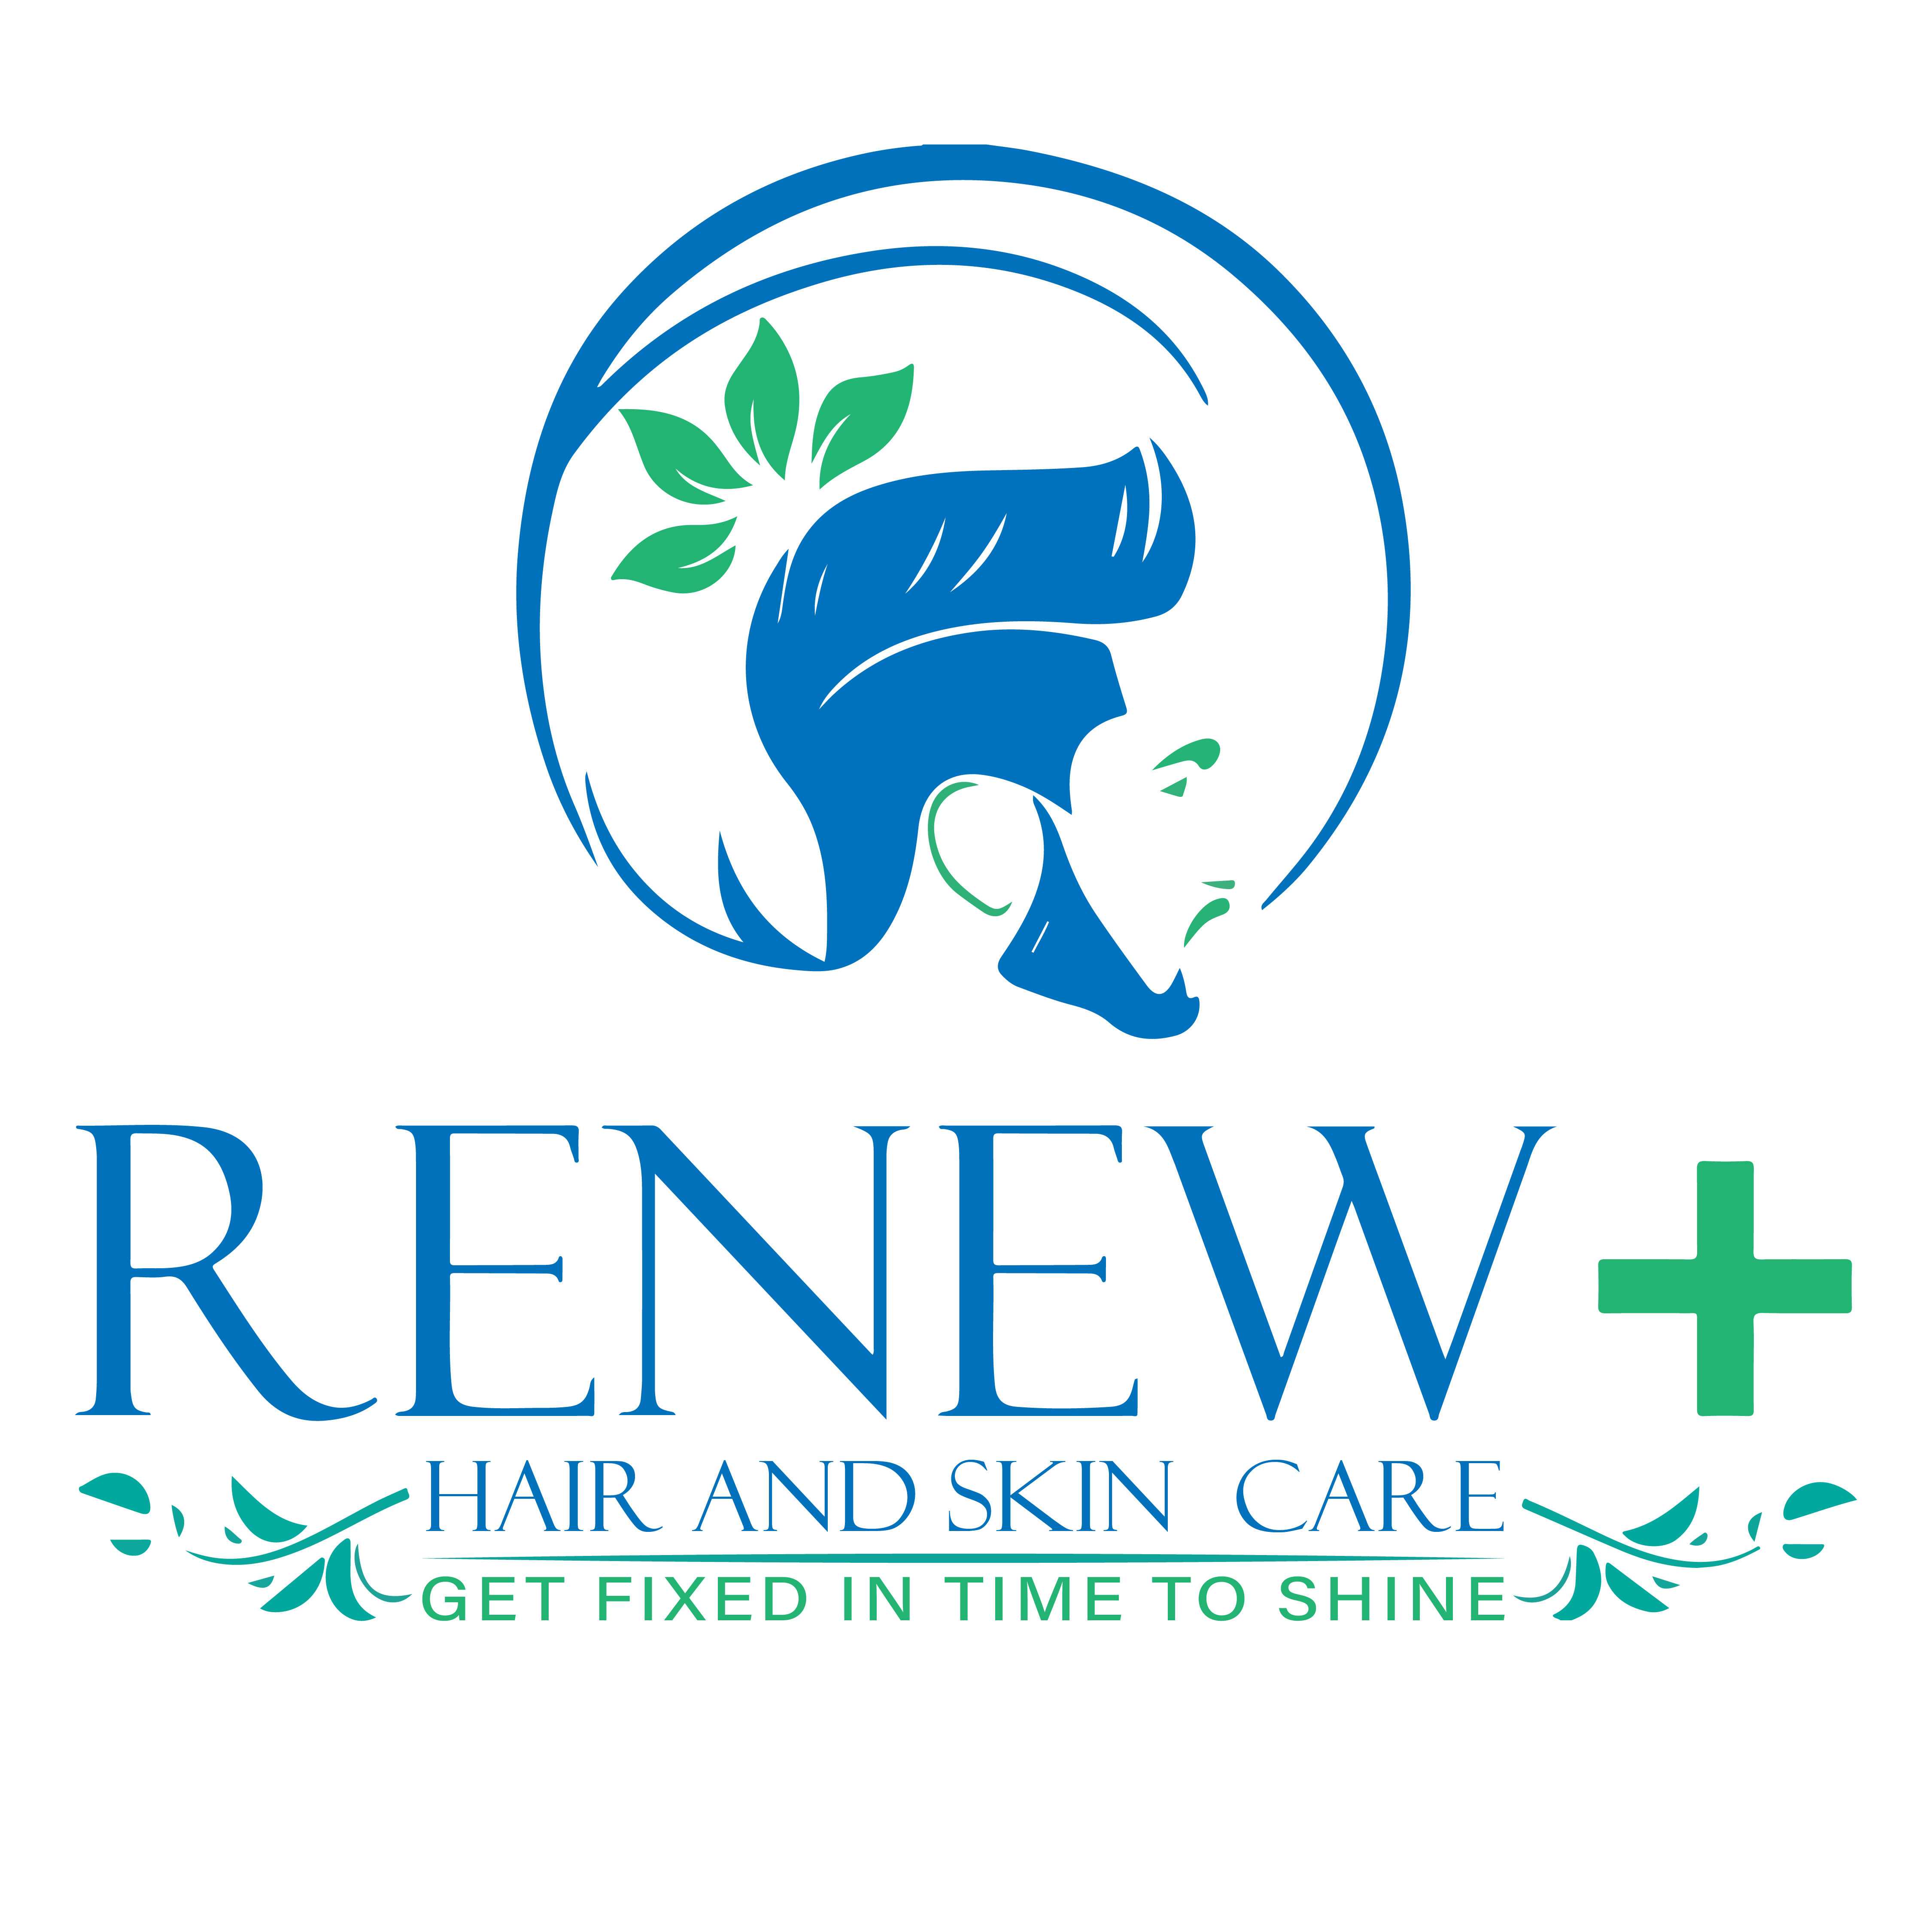 renew plus hair and skin care - hair loss treatment, hair transplantation clinic in tirunelveli | hair transplantation in tirunelvel